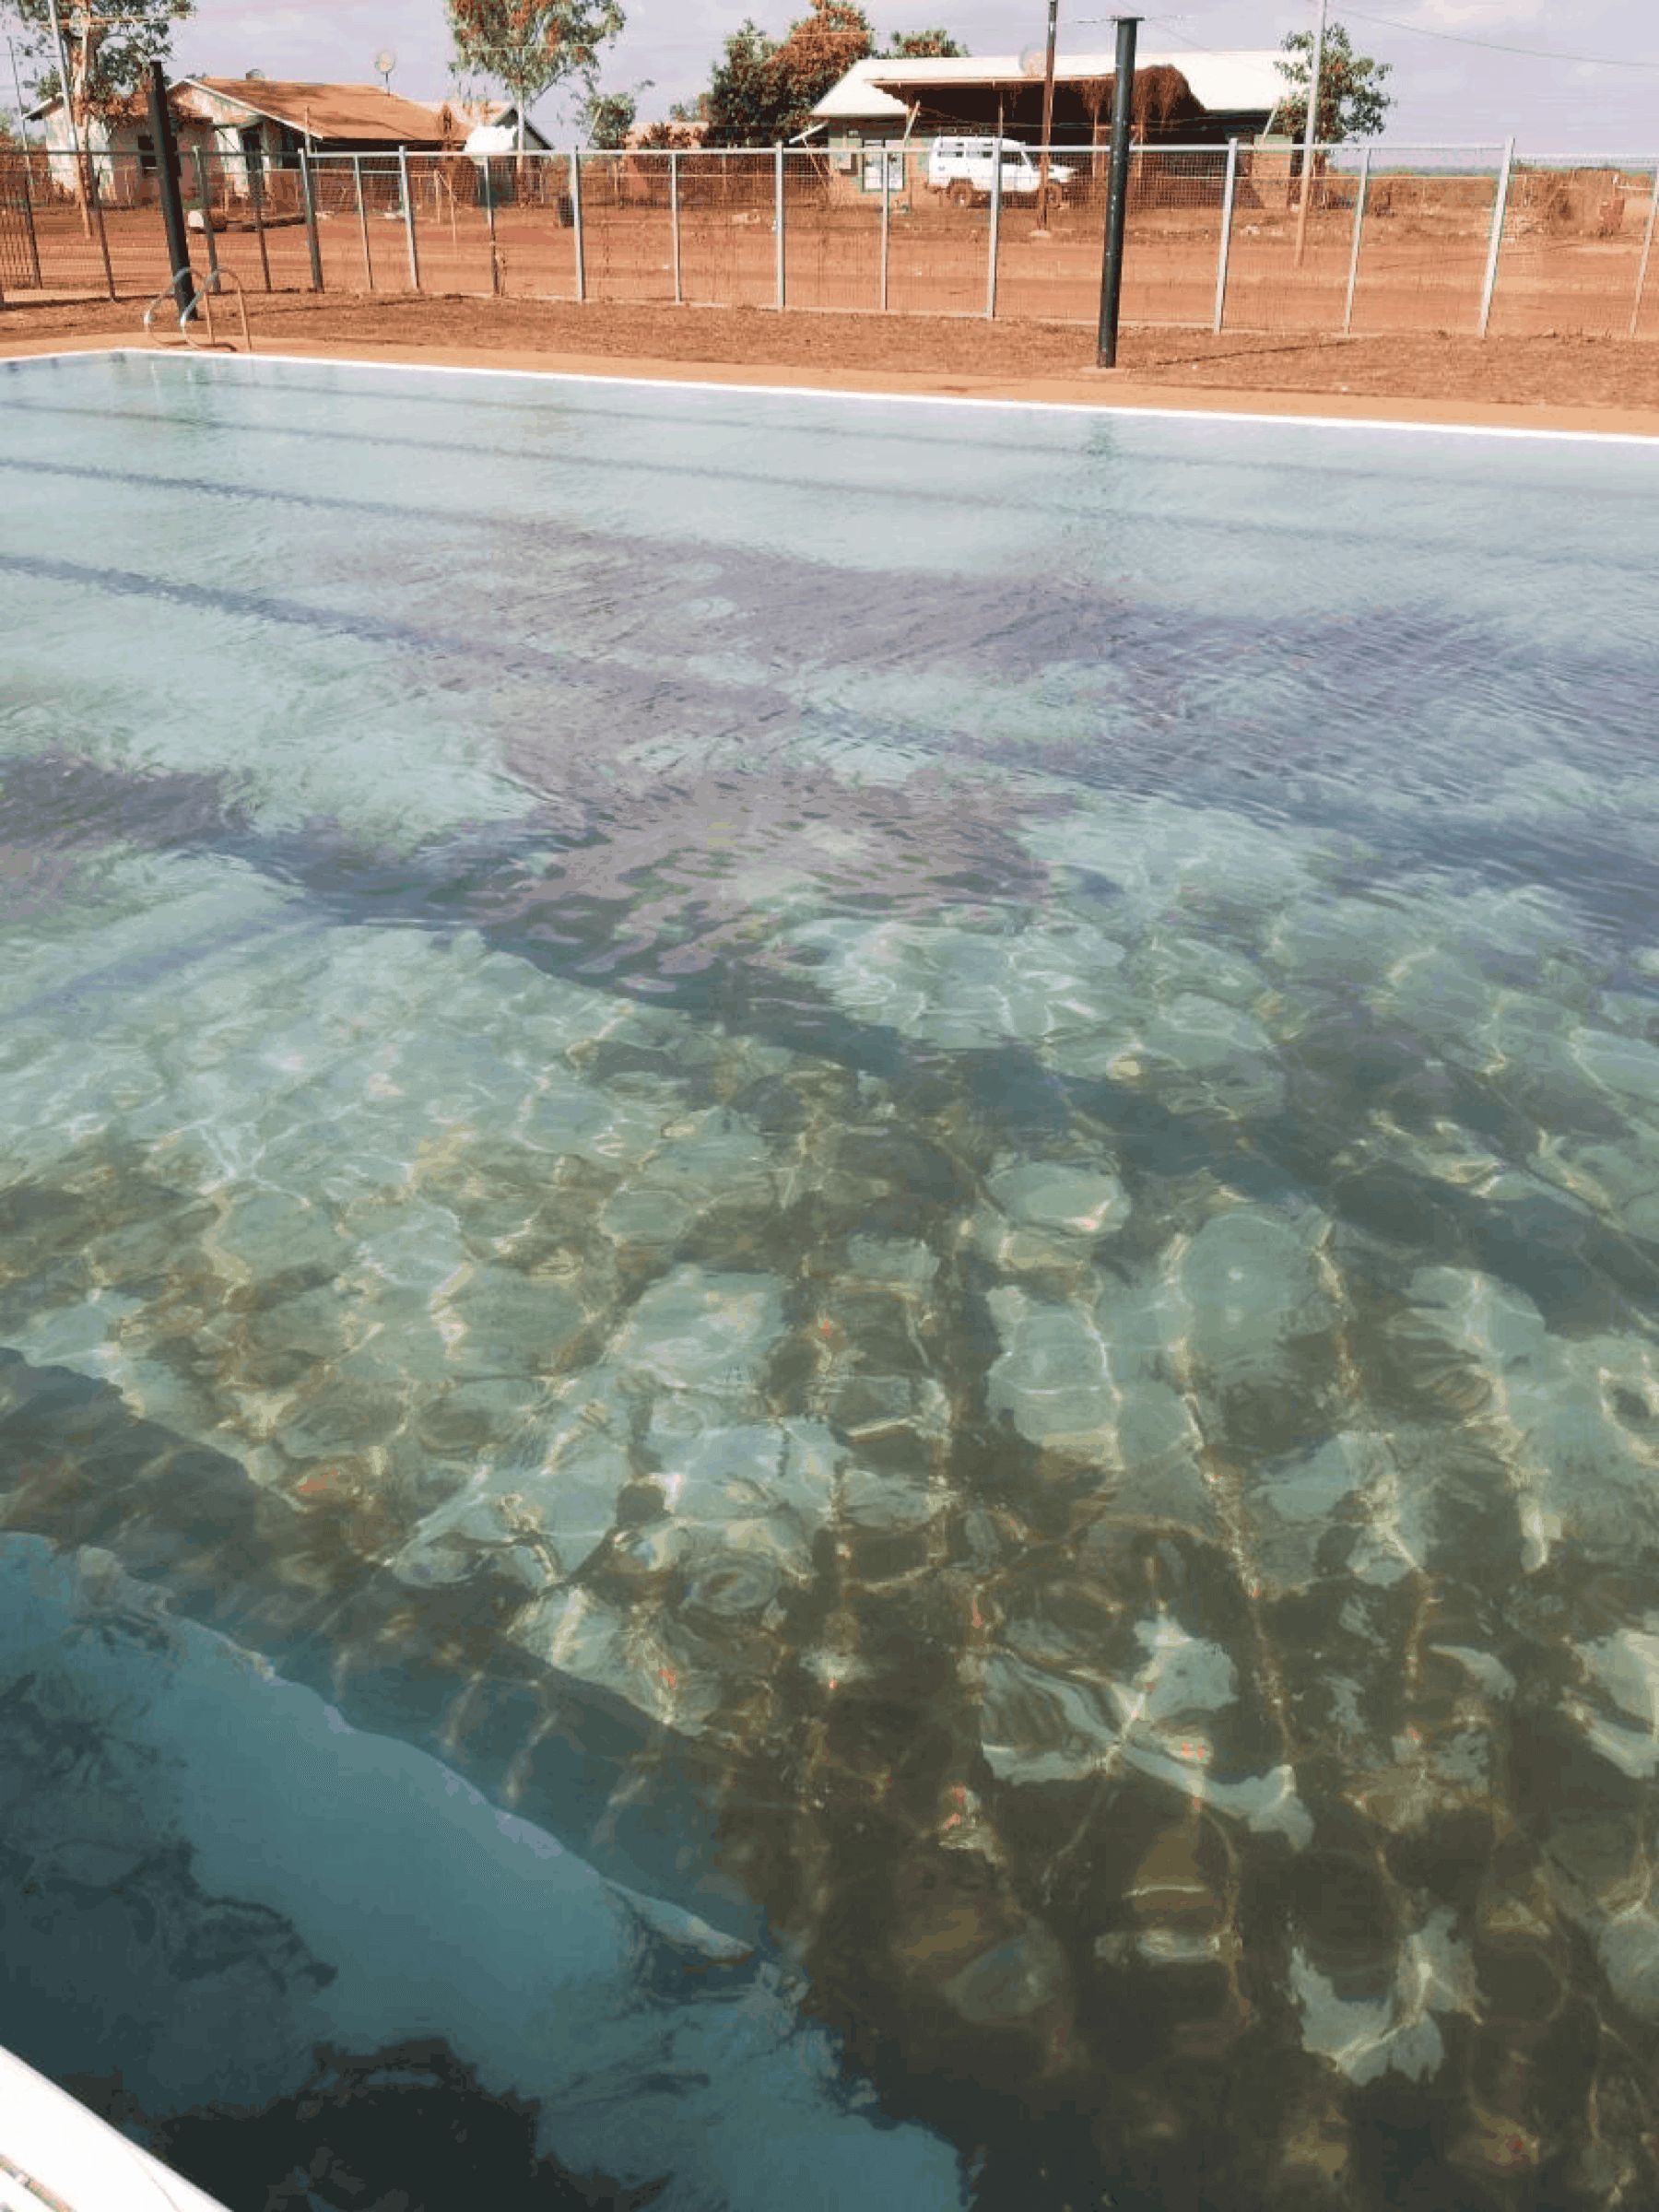 The Wadeye swimming pool